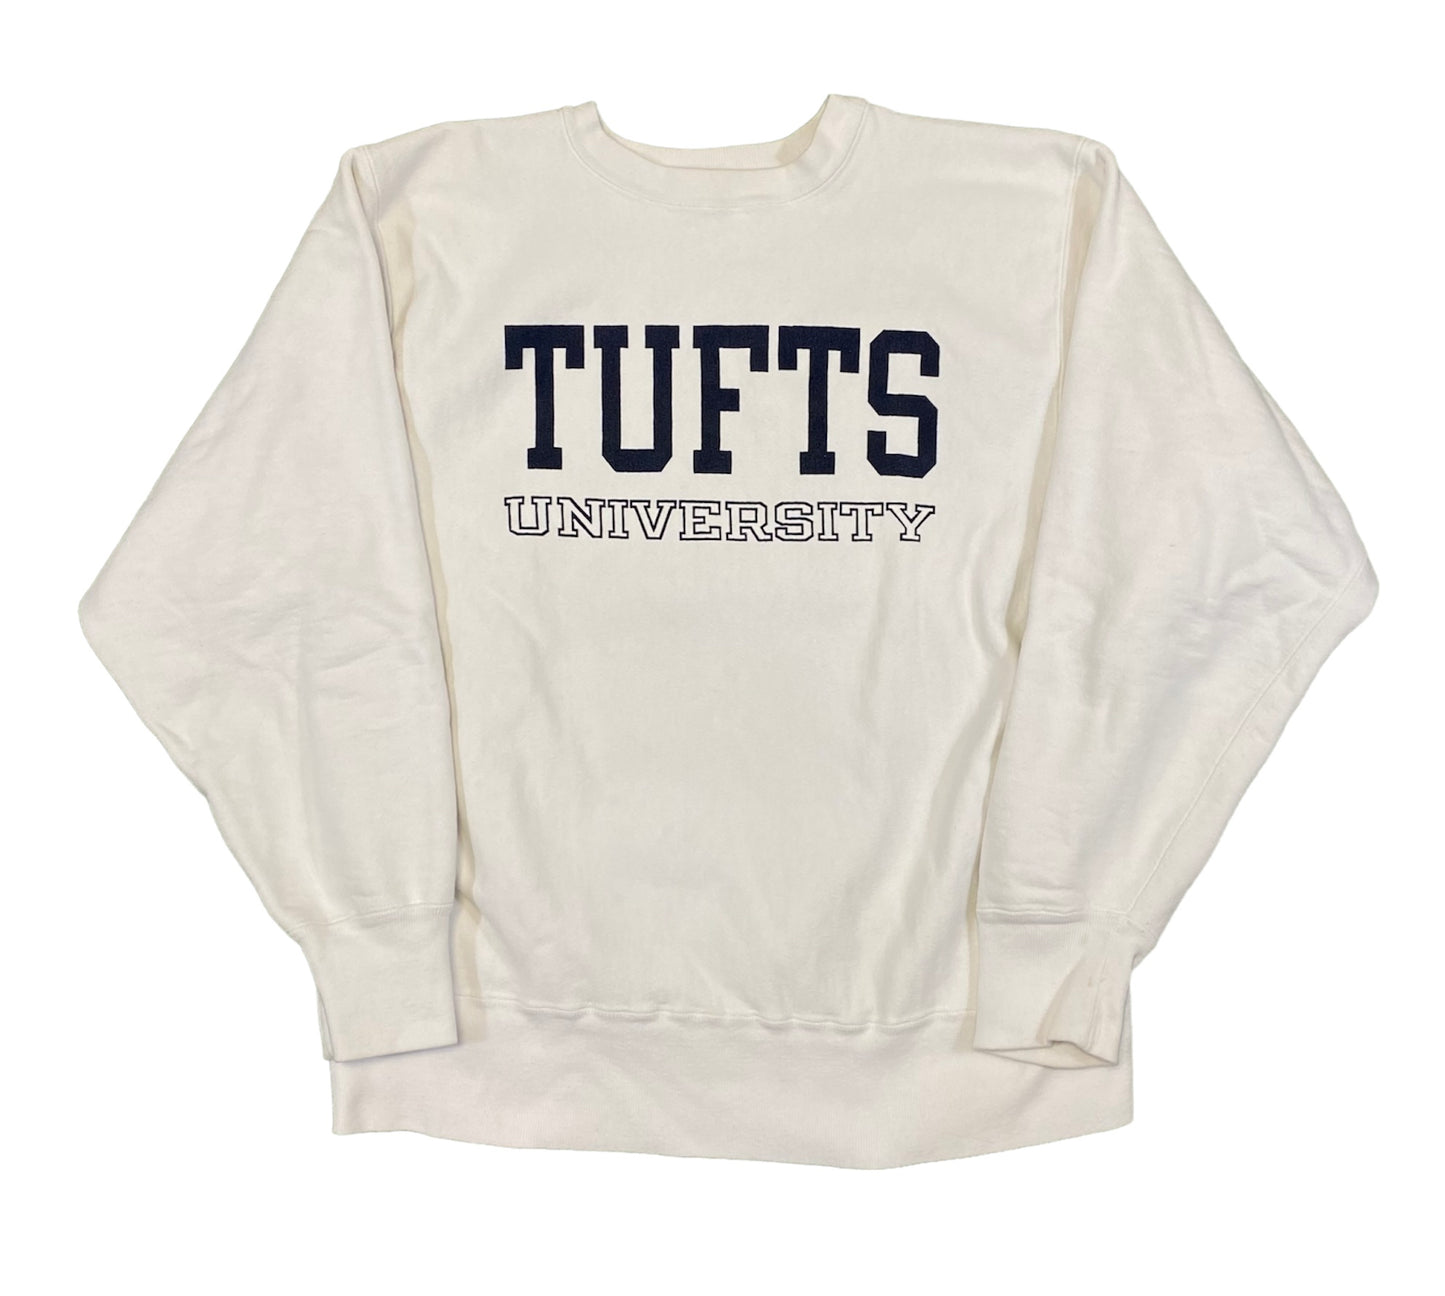 1980’s Tufts University Champion Reverse Weave Sweatshirt